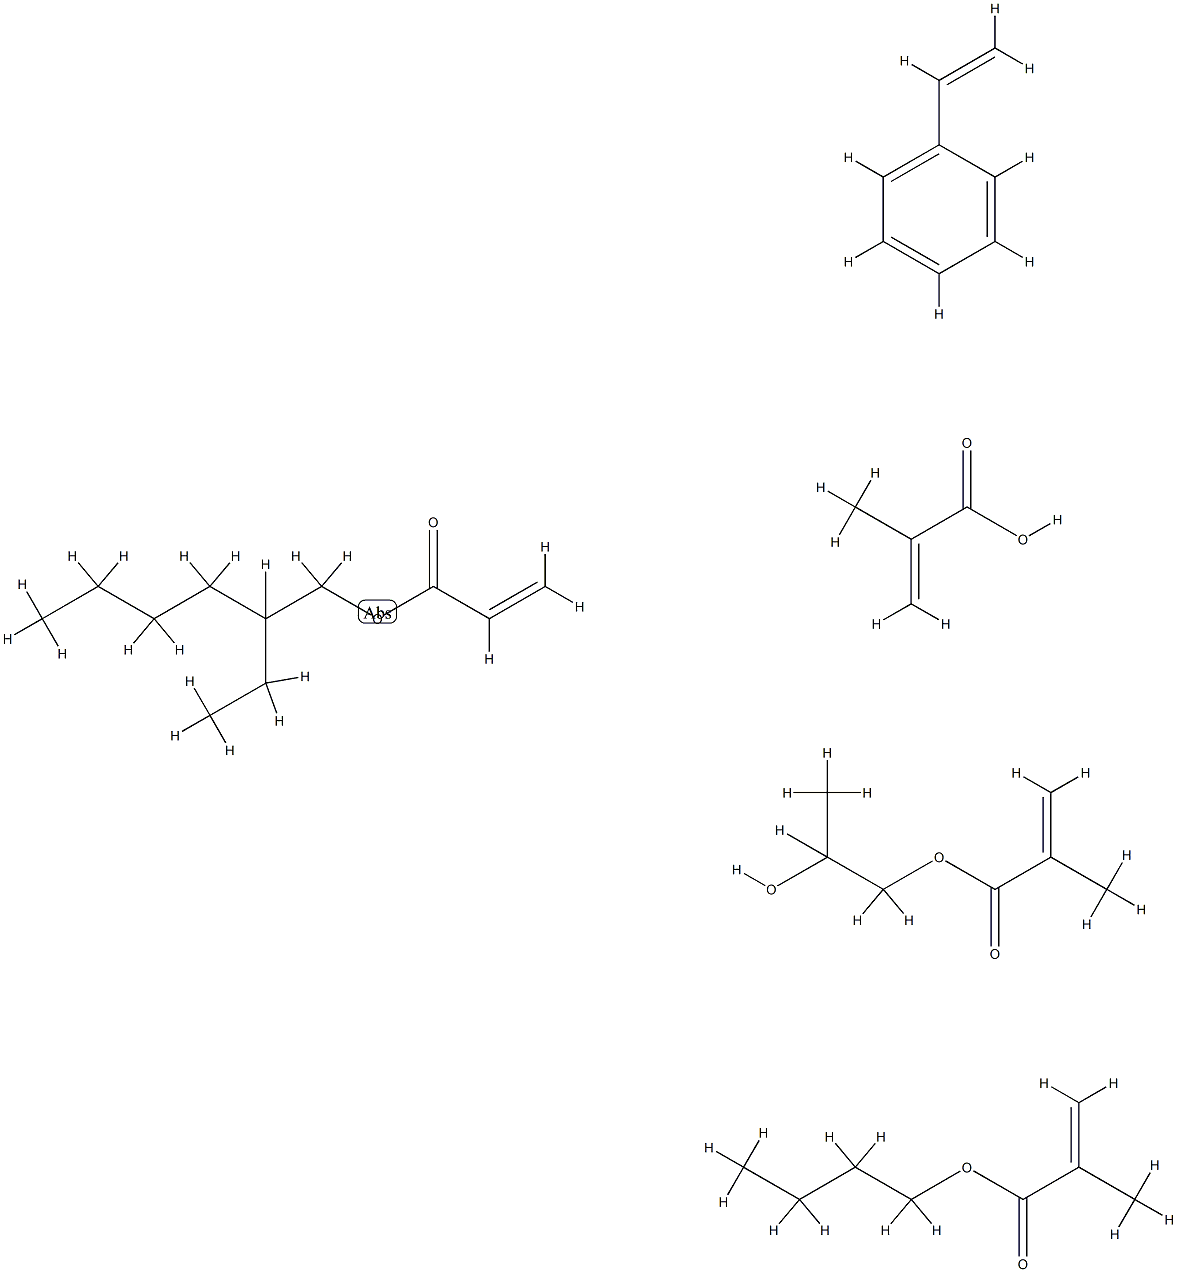 2-Propenoic acid, 2-methyl-, polymer with butyl 2-methyl-2-propenoate, ethenylbenzene, 2-ethylhexyl 2-propenoate and 1,2-propanediol mono(2-methyl-2-propenoate)|